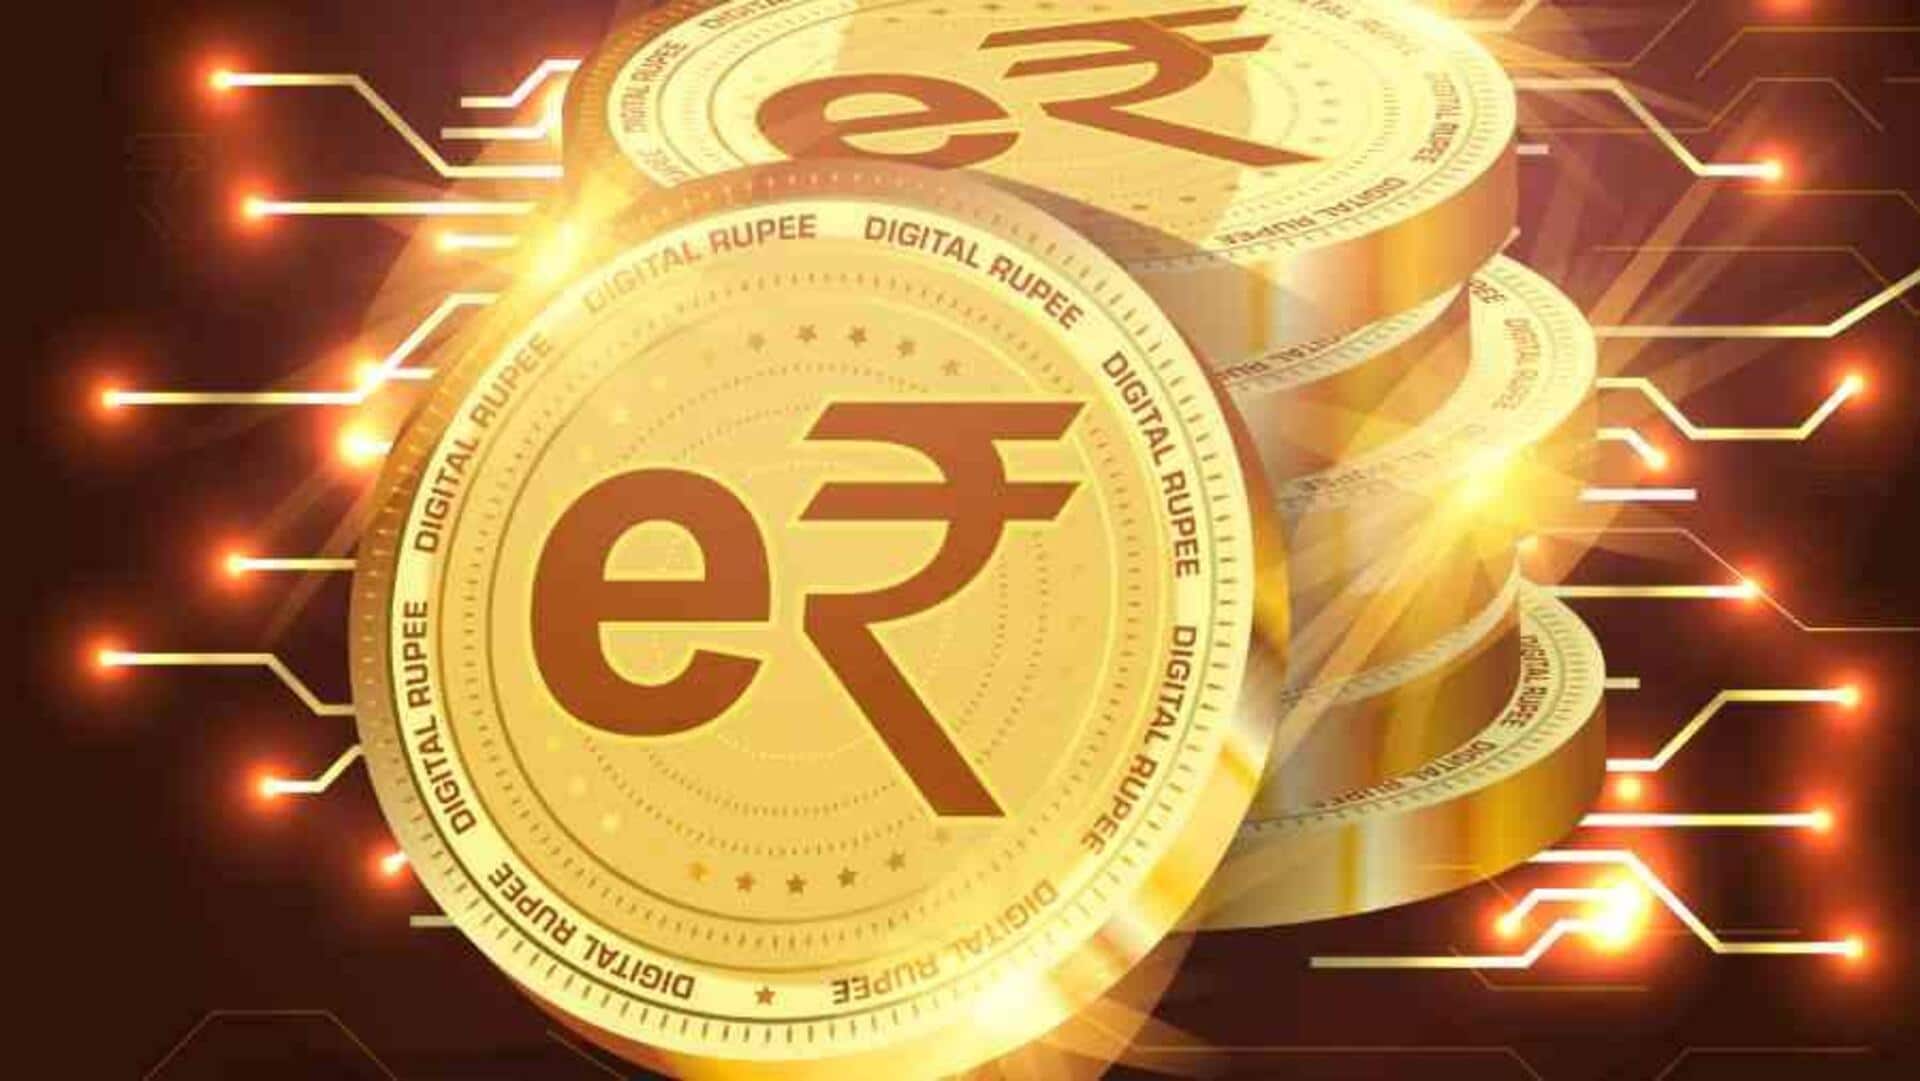 E-Rupee transactions surpass 10 lakh per day milestone in December